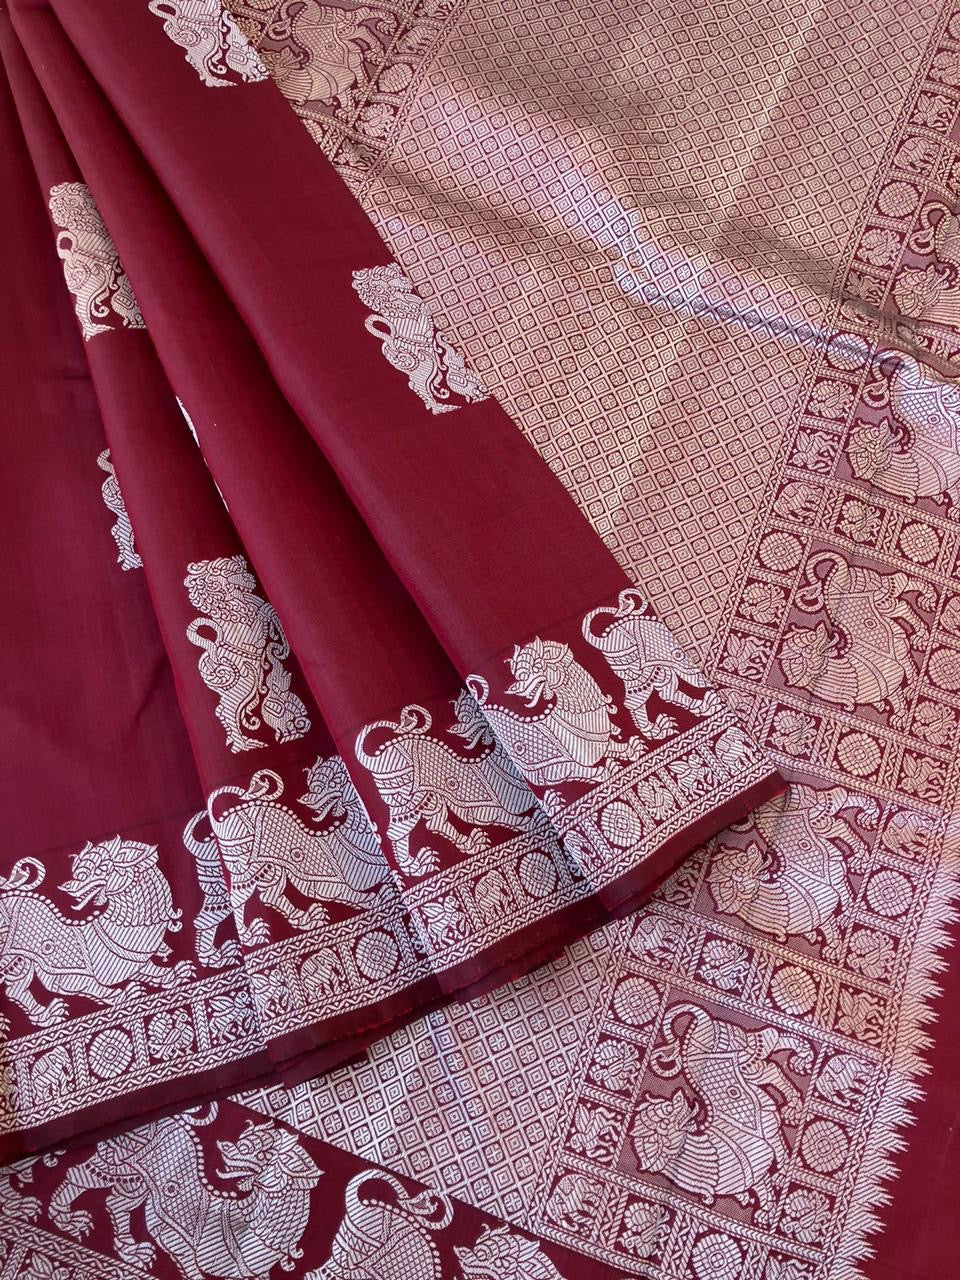 Woven from Memories - Beautiful No Zari Kanchivarams - gorgeous maroon yali woven buttas and borders